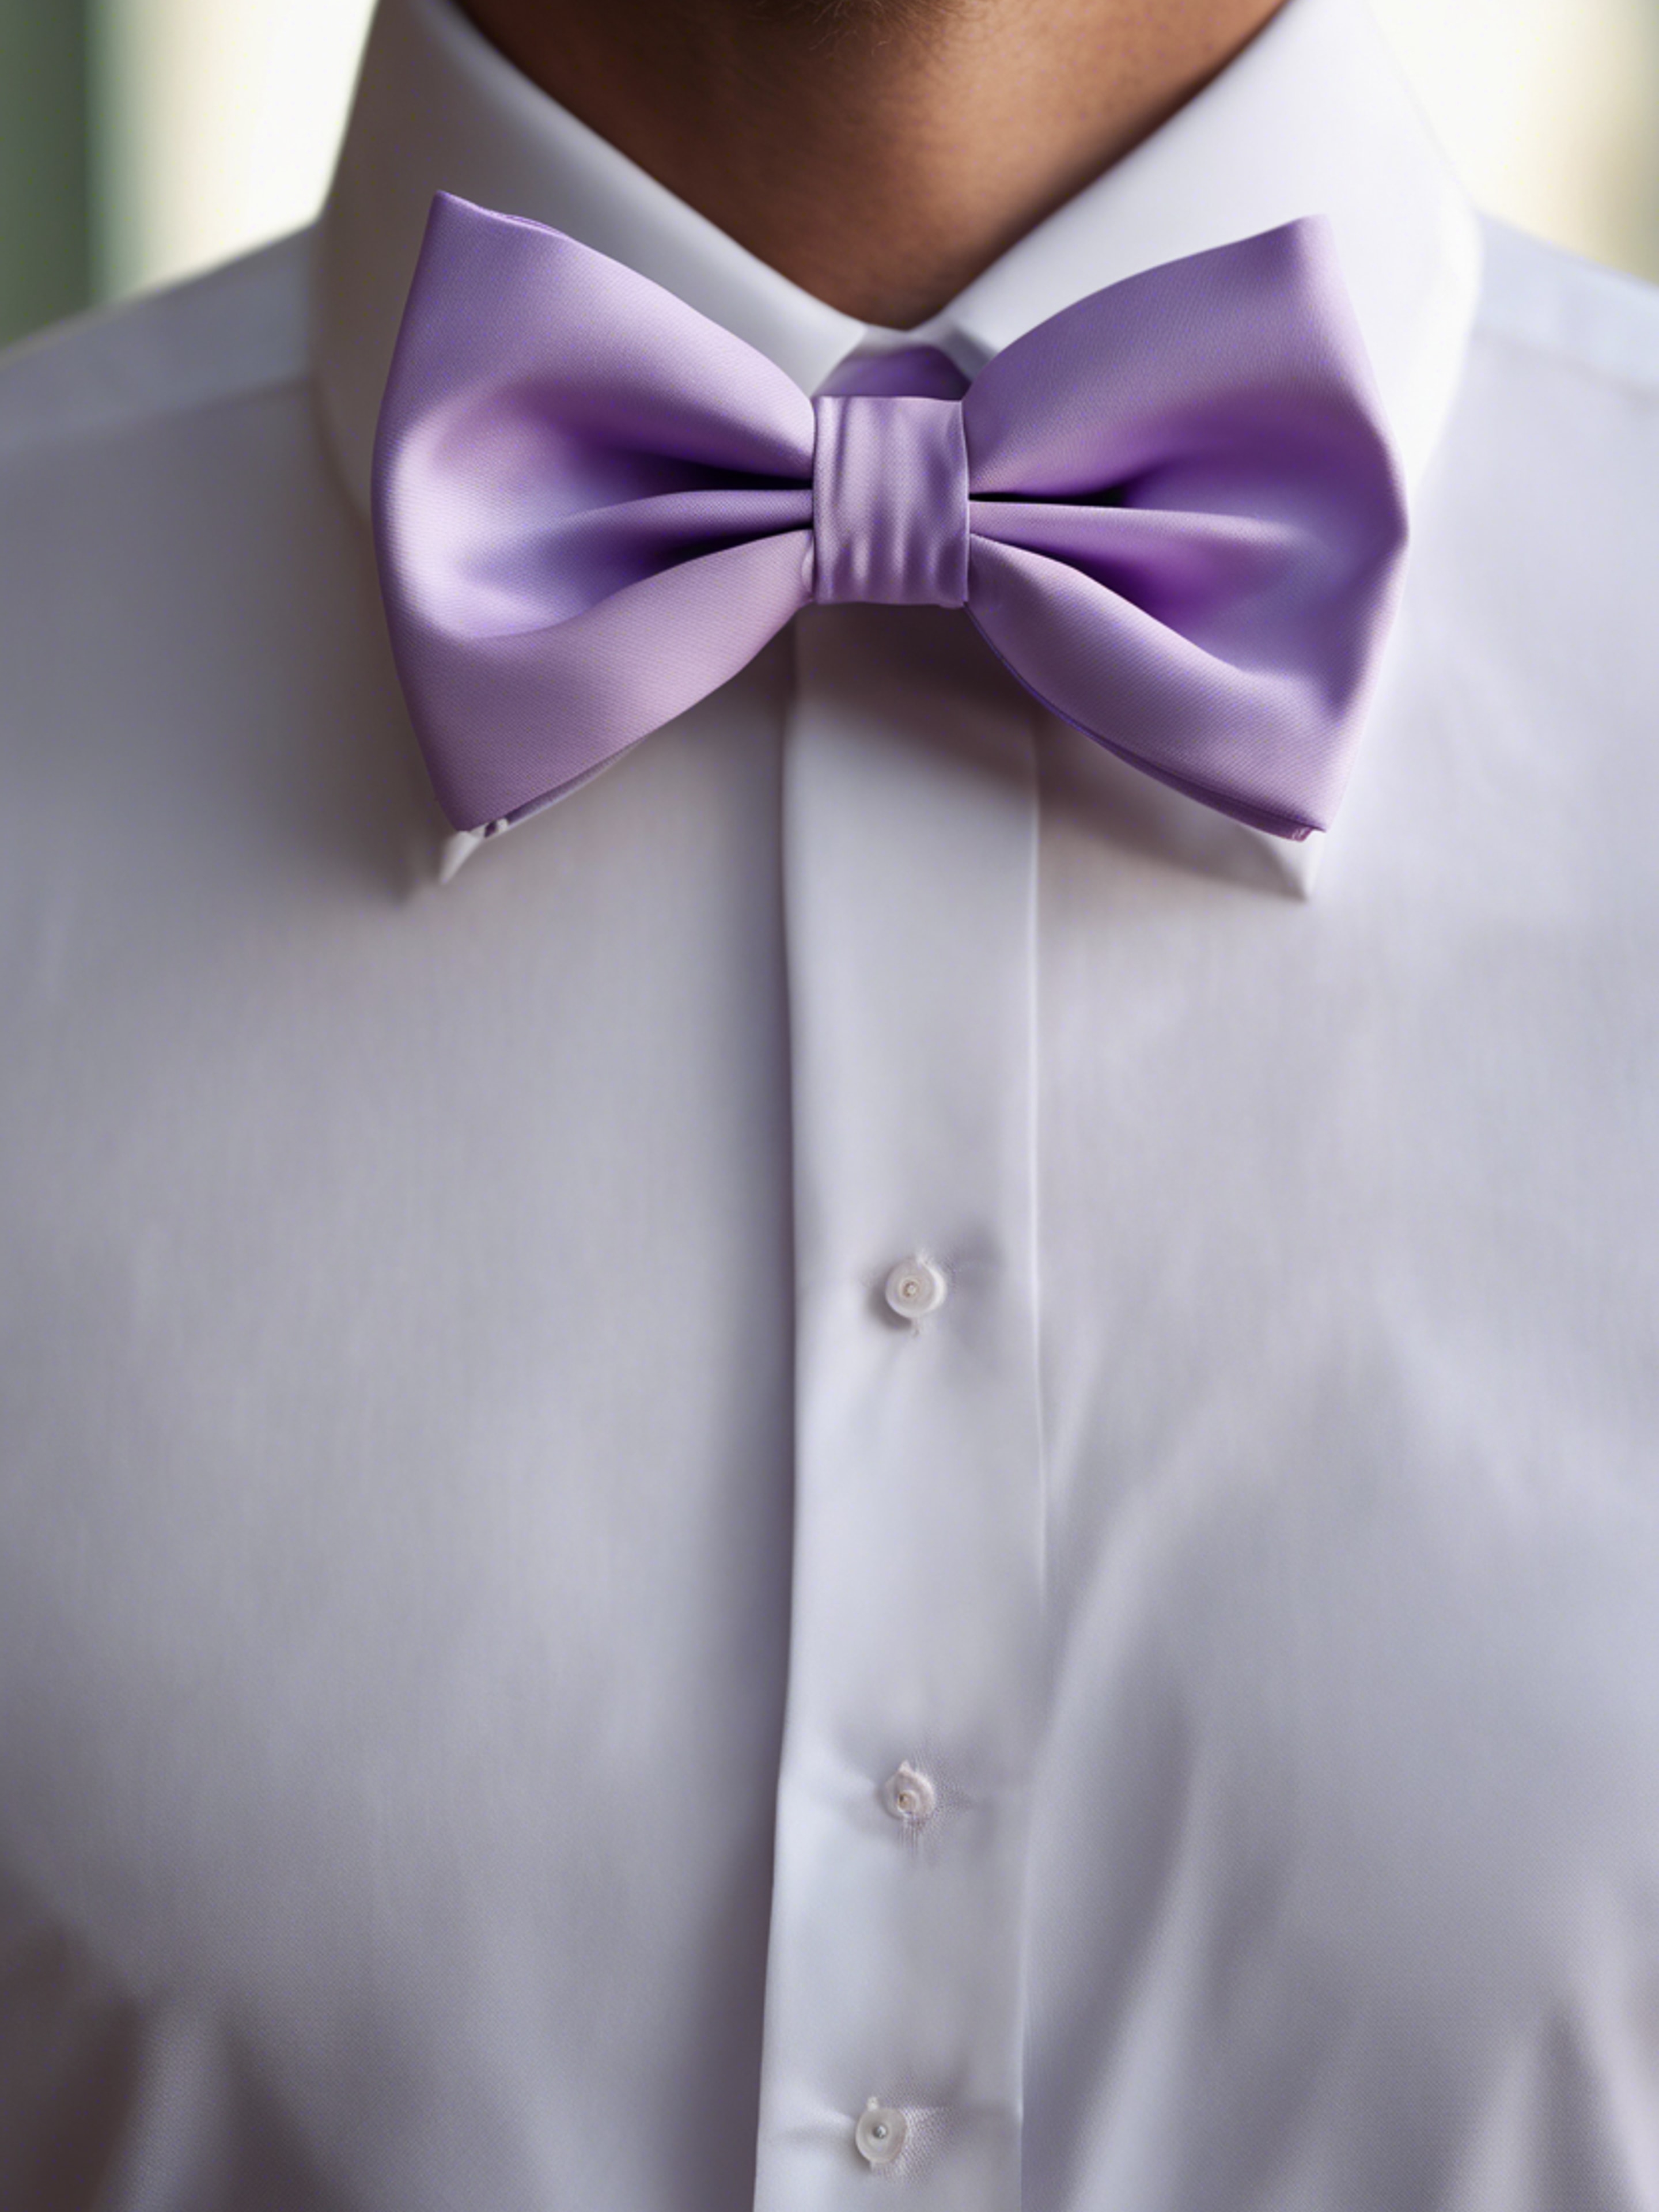 A preppy pastel purple bow tie on a crisp white shirt. کاغذ دیواری[5e87c7412f5947d28f4c]